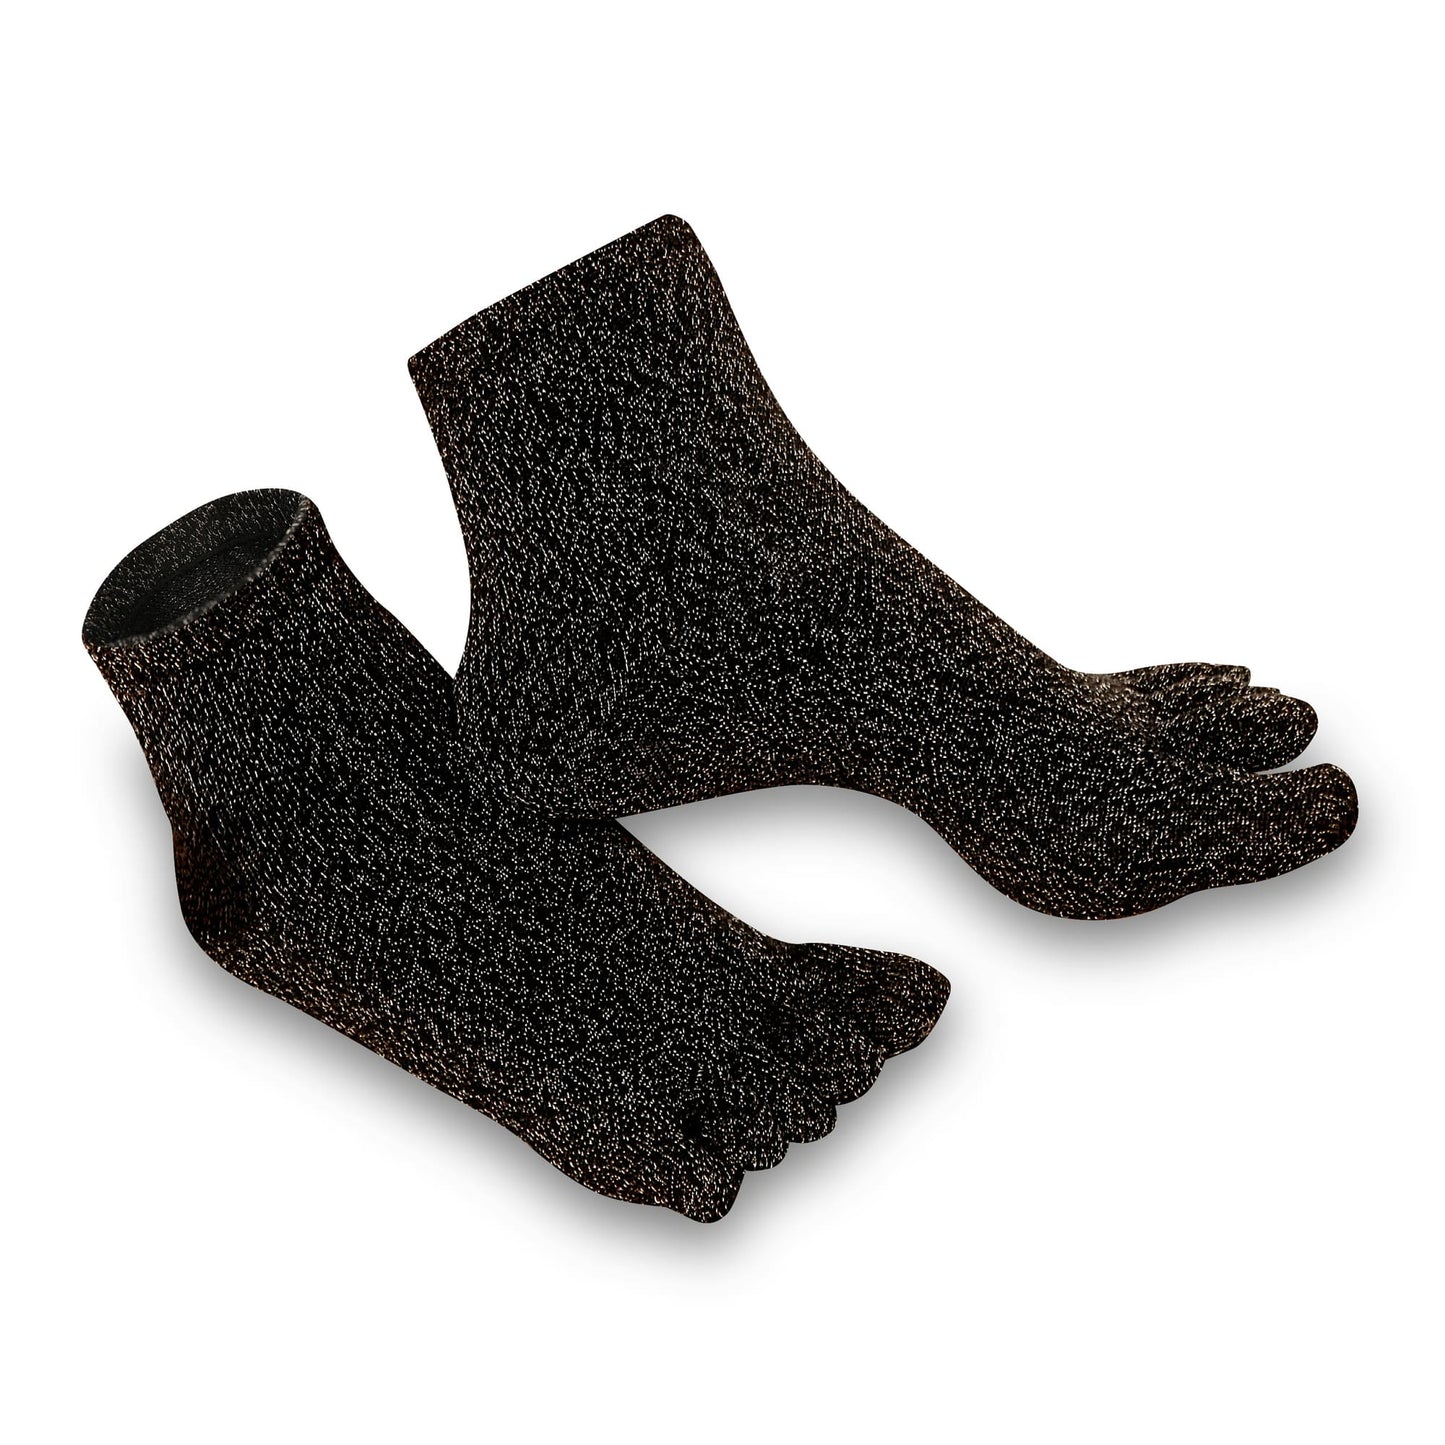 Silvernite® Supermicro antibacterial silver toe socks